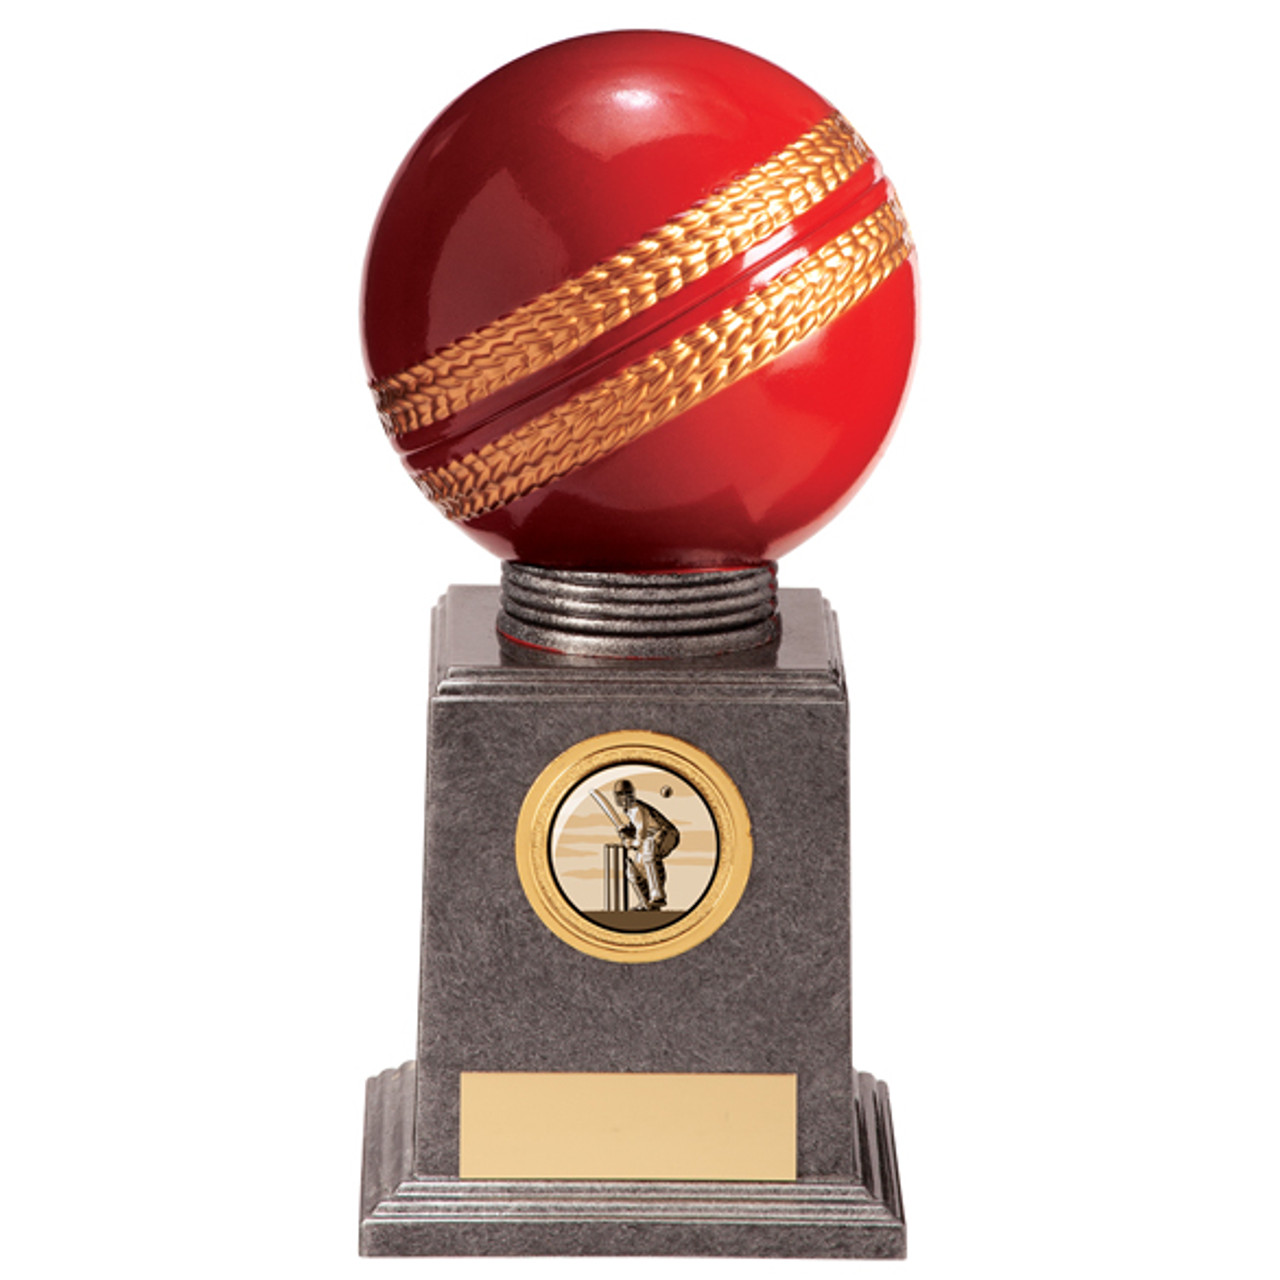 VALIANT LEGEND Cricket Ball Trophy